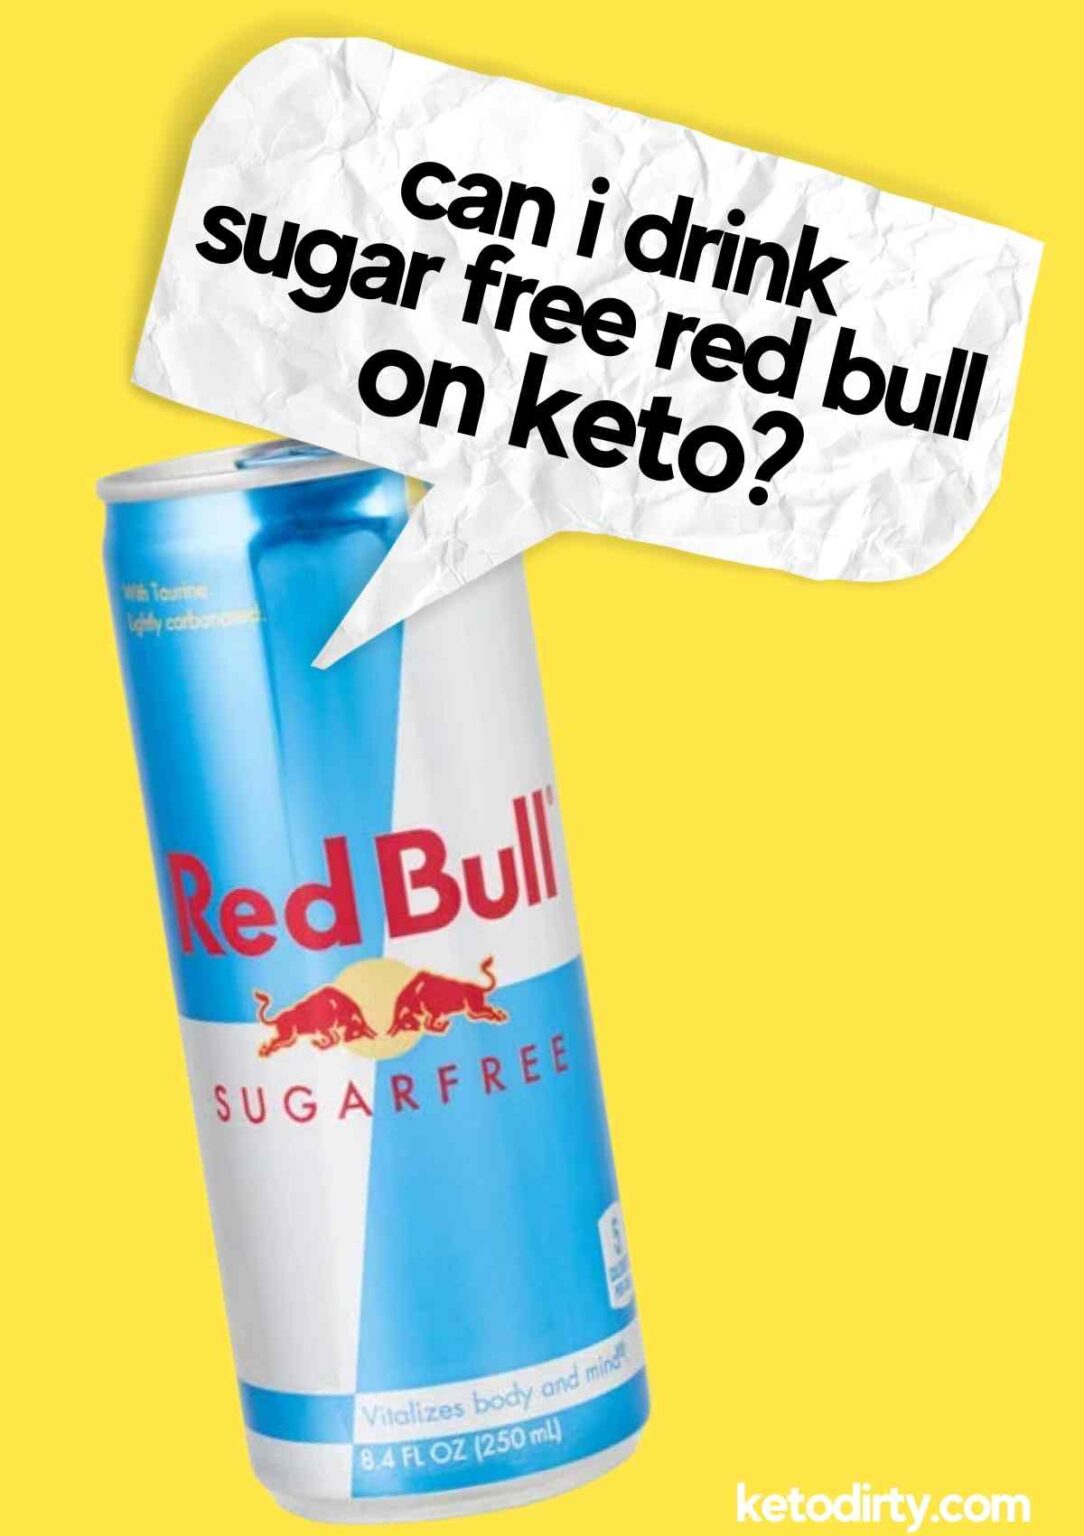 Is Sugar Free Red Bull Keto Friendly? 5 Things To Know